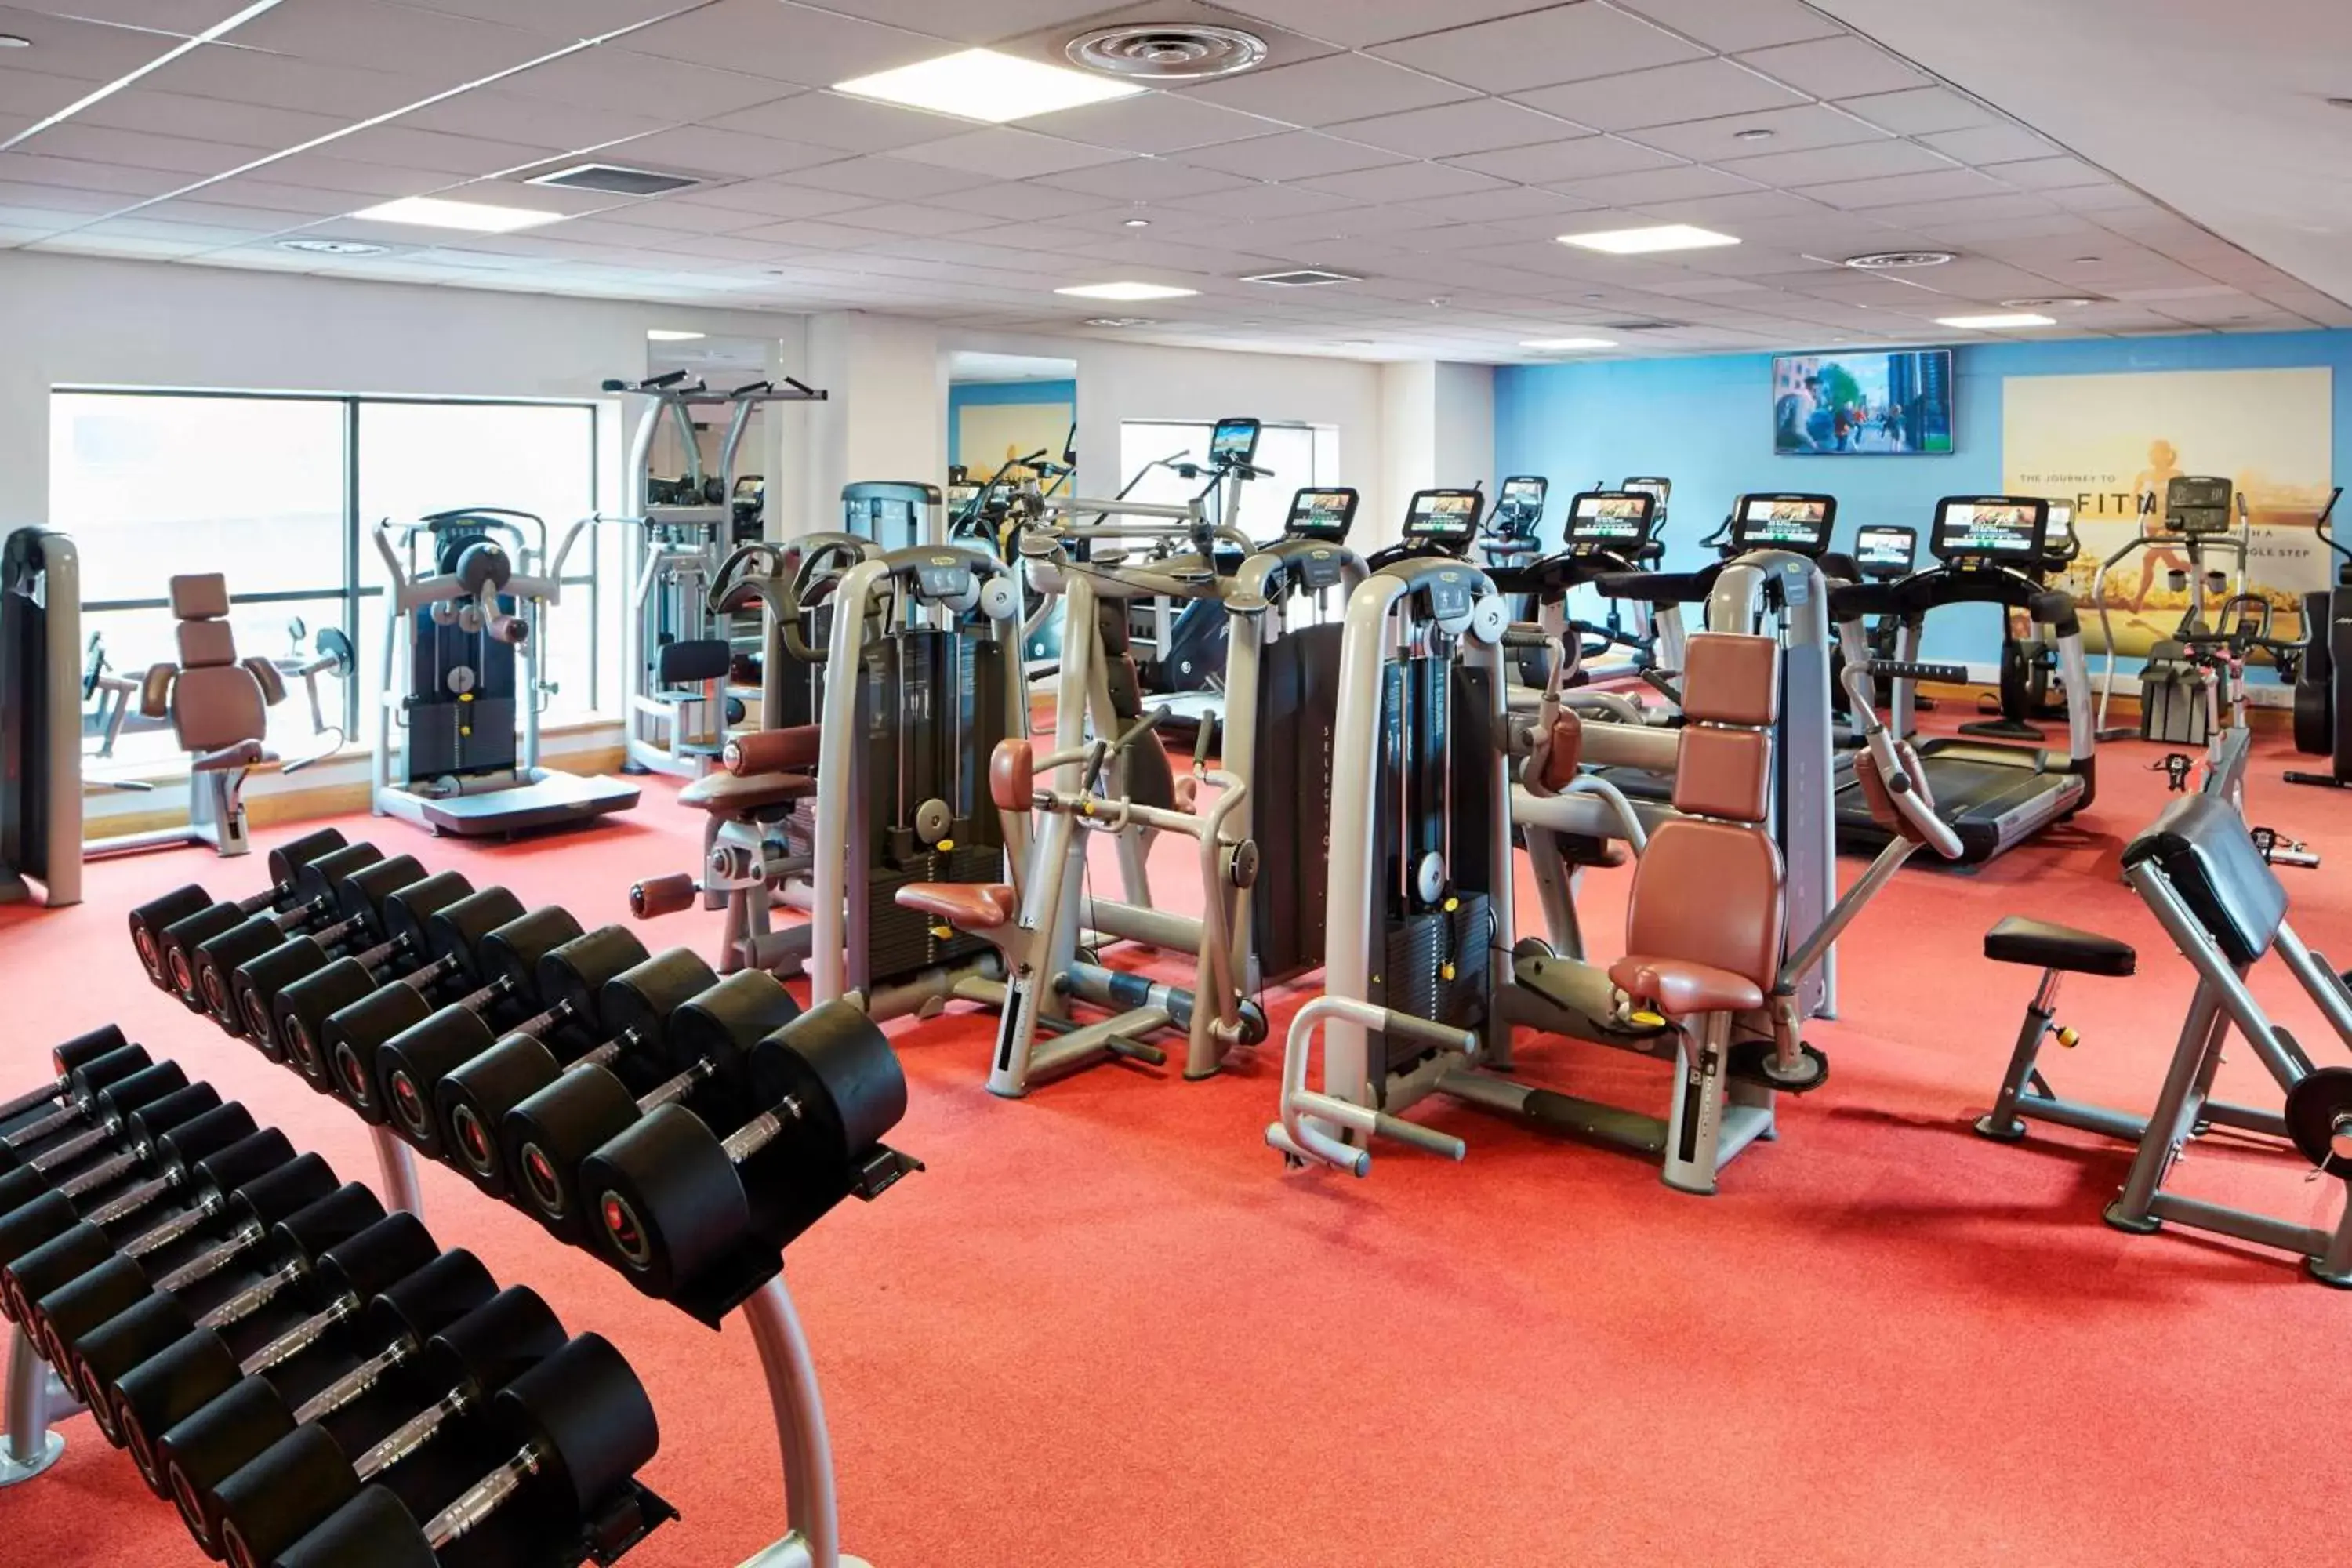 Fitness centre/facilities, Fitness Center/Facilities in Glasgow Marriott Hotel